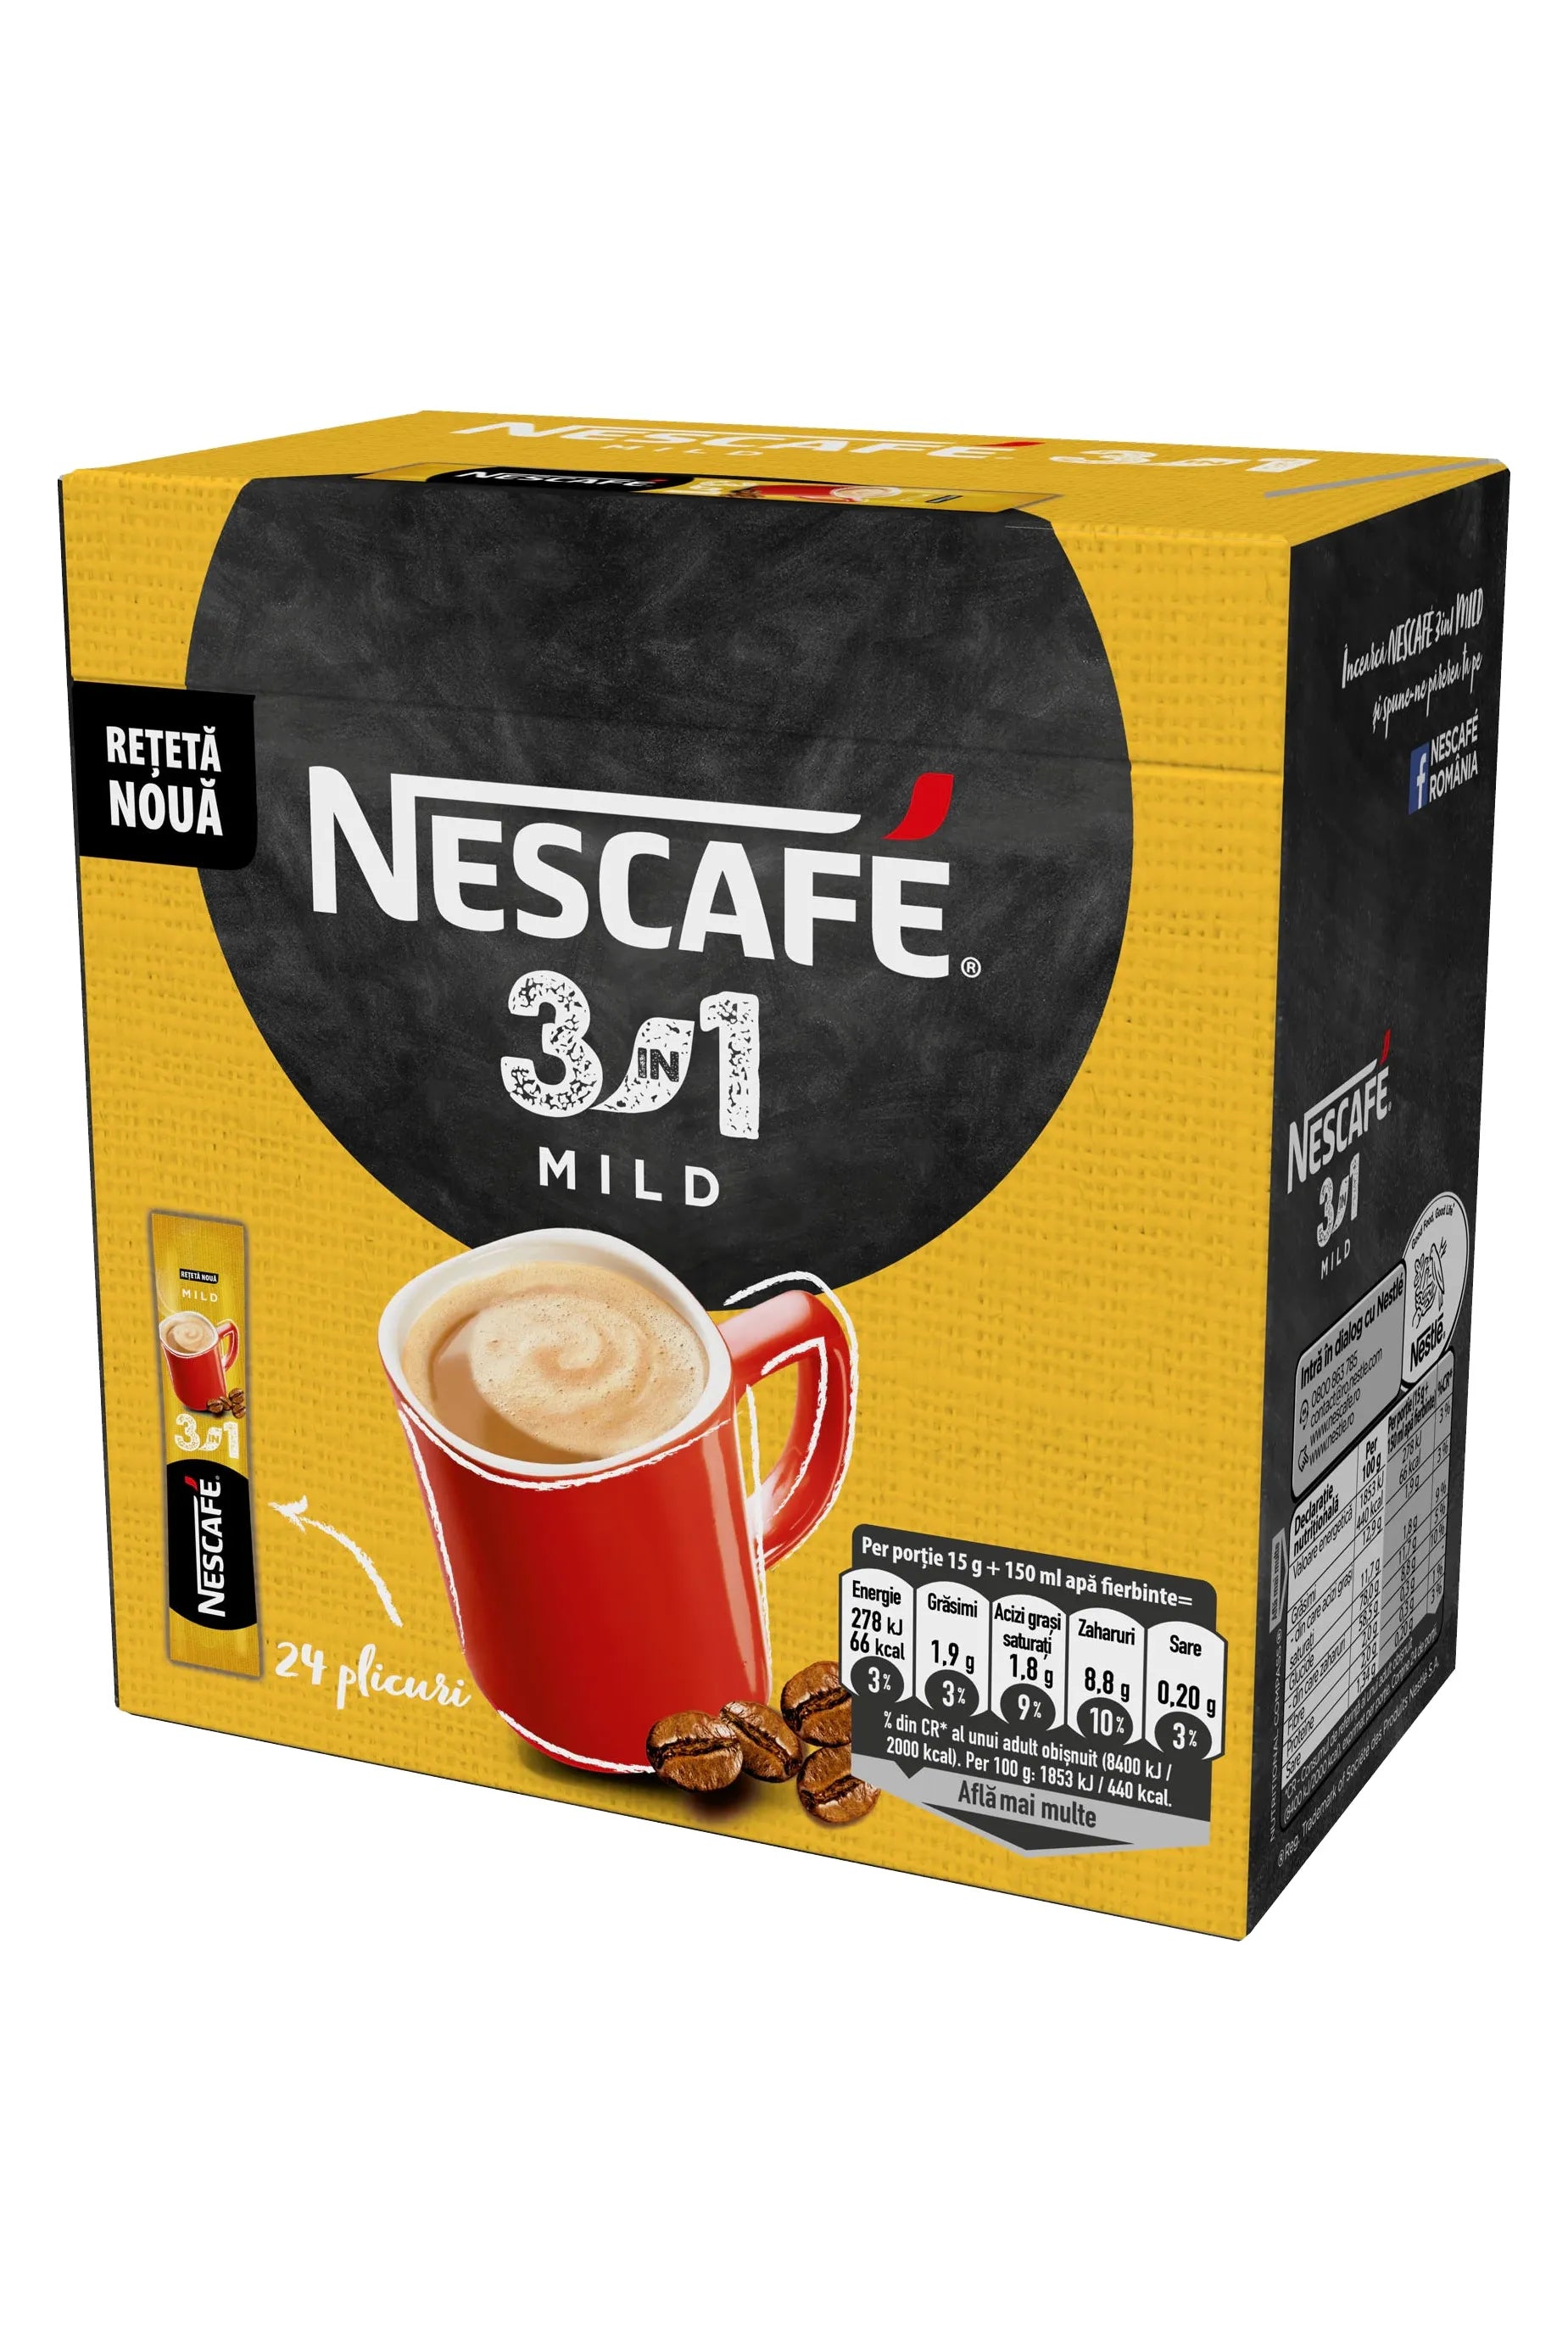 Nescafe Instant 3 in 1 Coffee - MILD